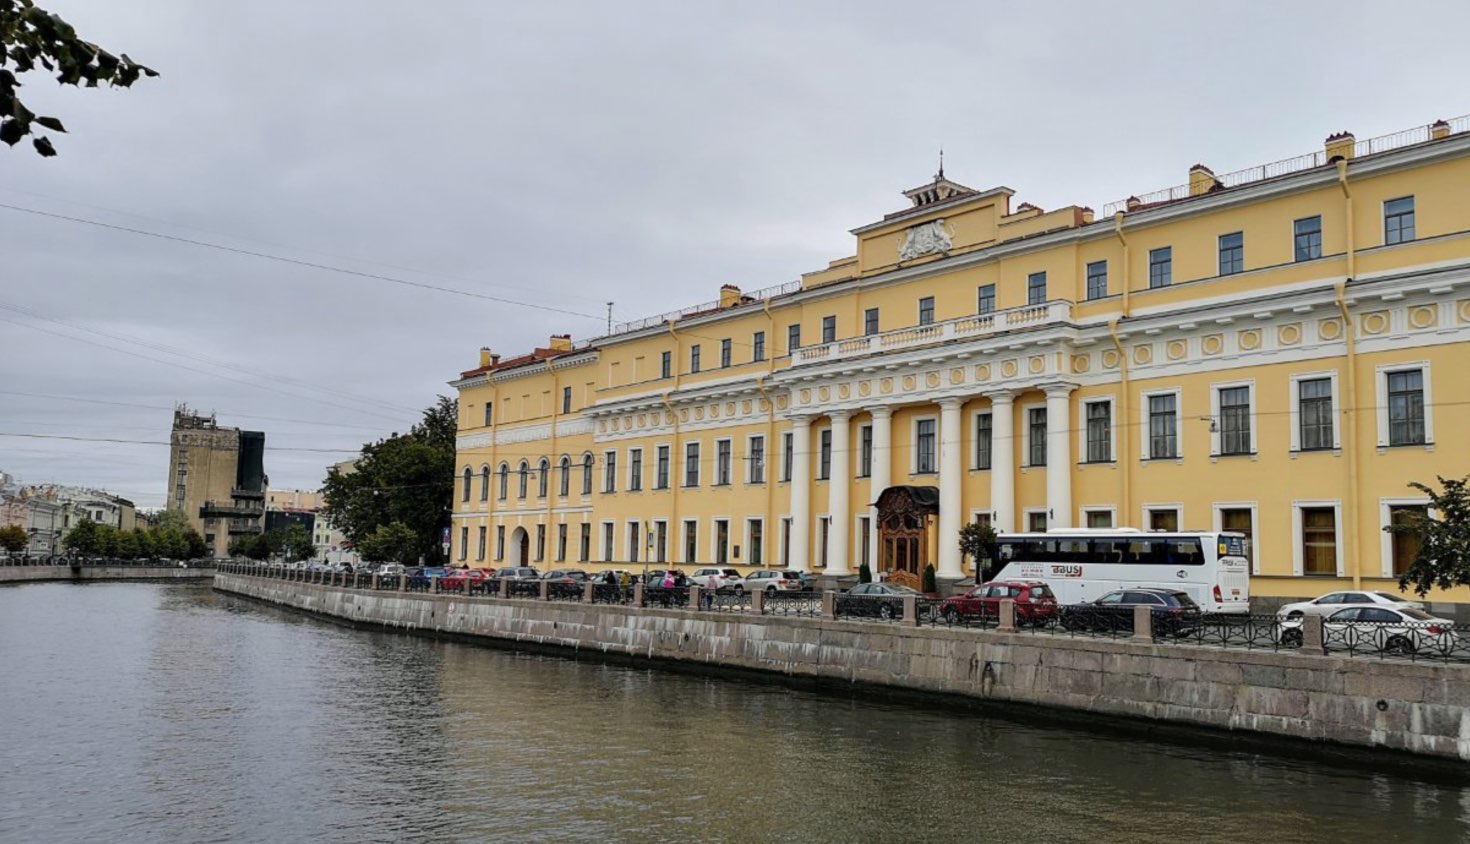 Access to Yusupov Palace - Moika 94 - St. Petersburg